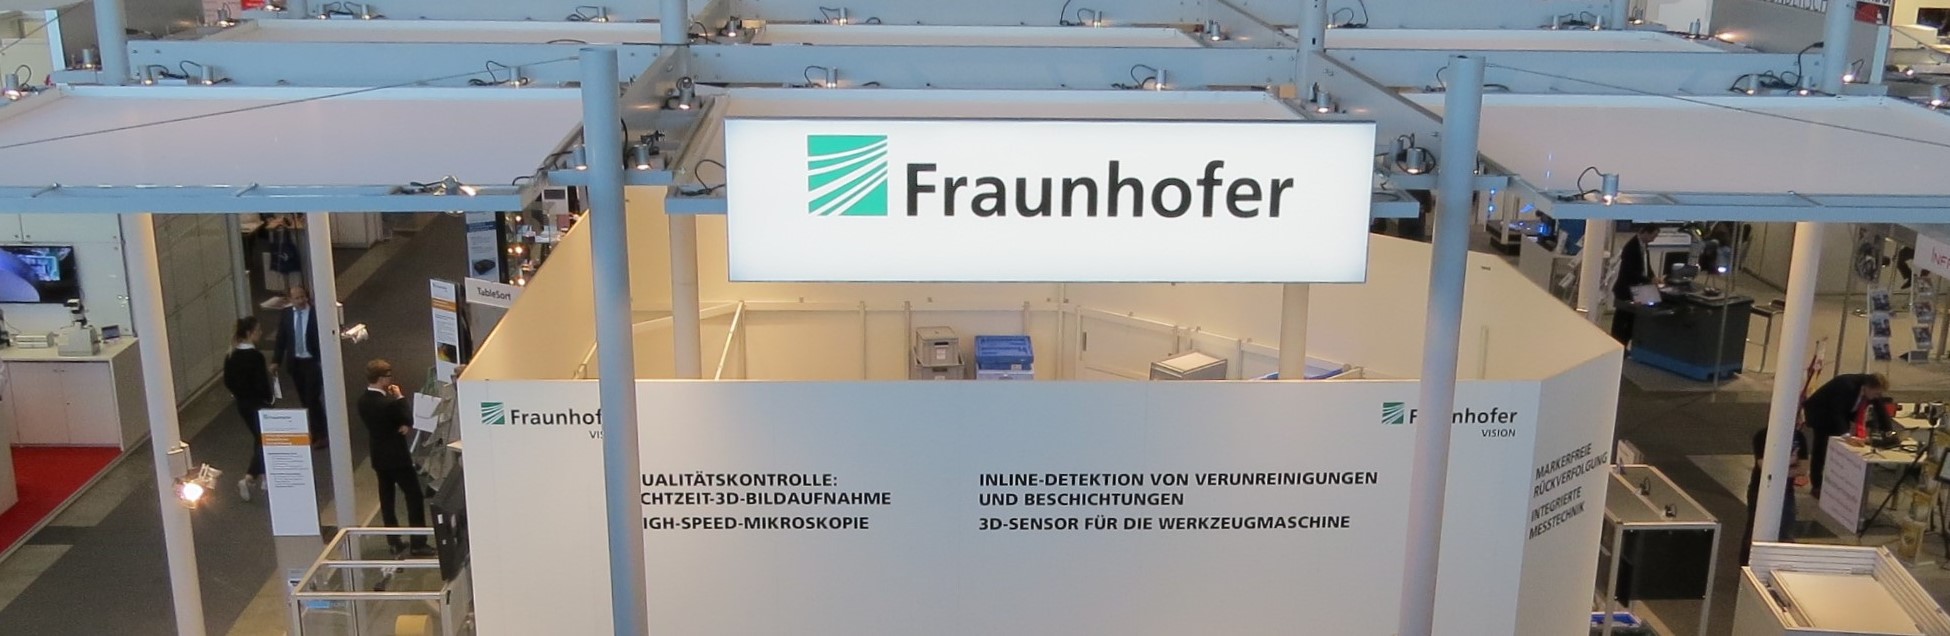 Fraunhofer Vision Control 2020 Stand 1